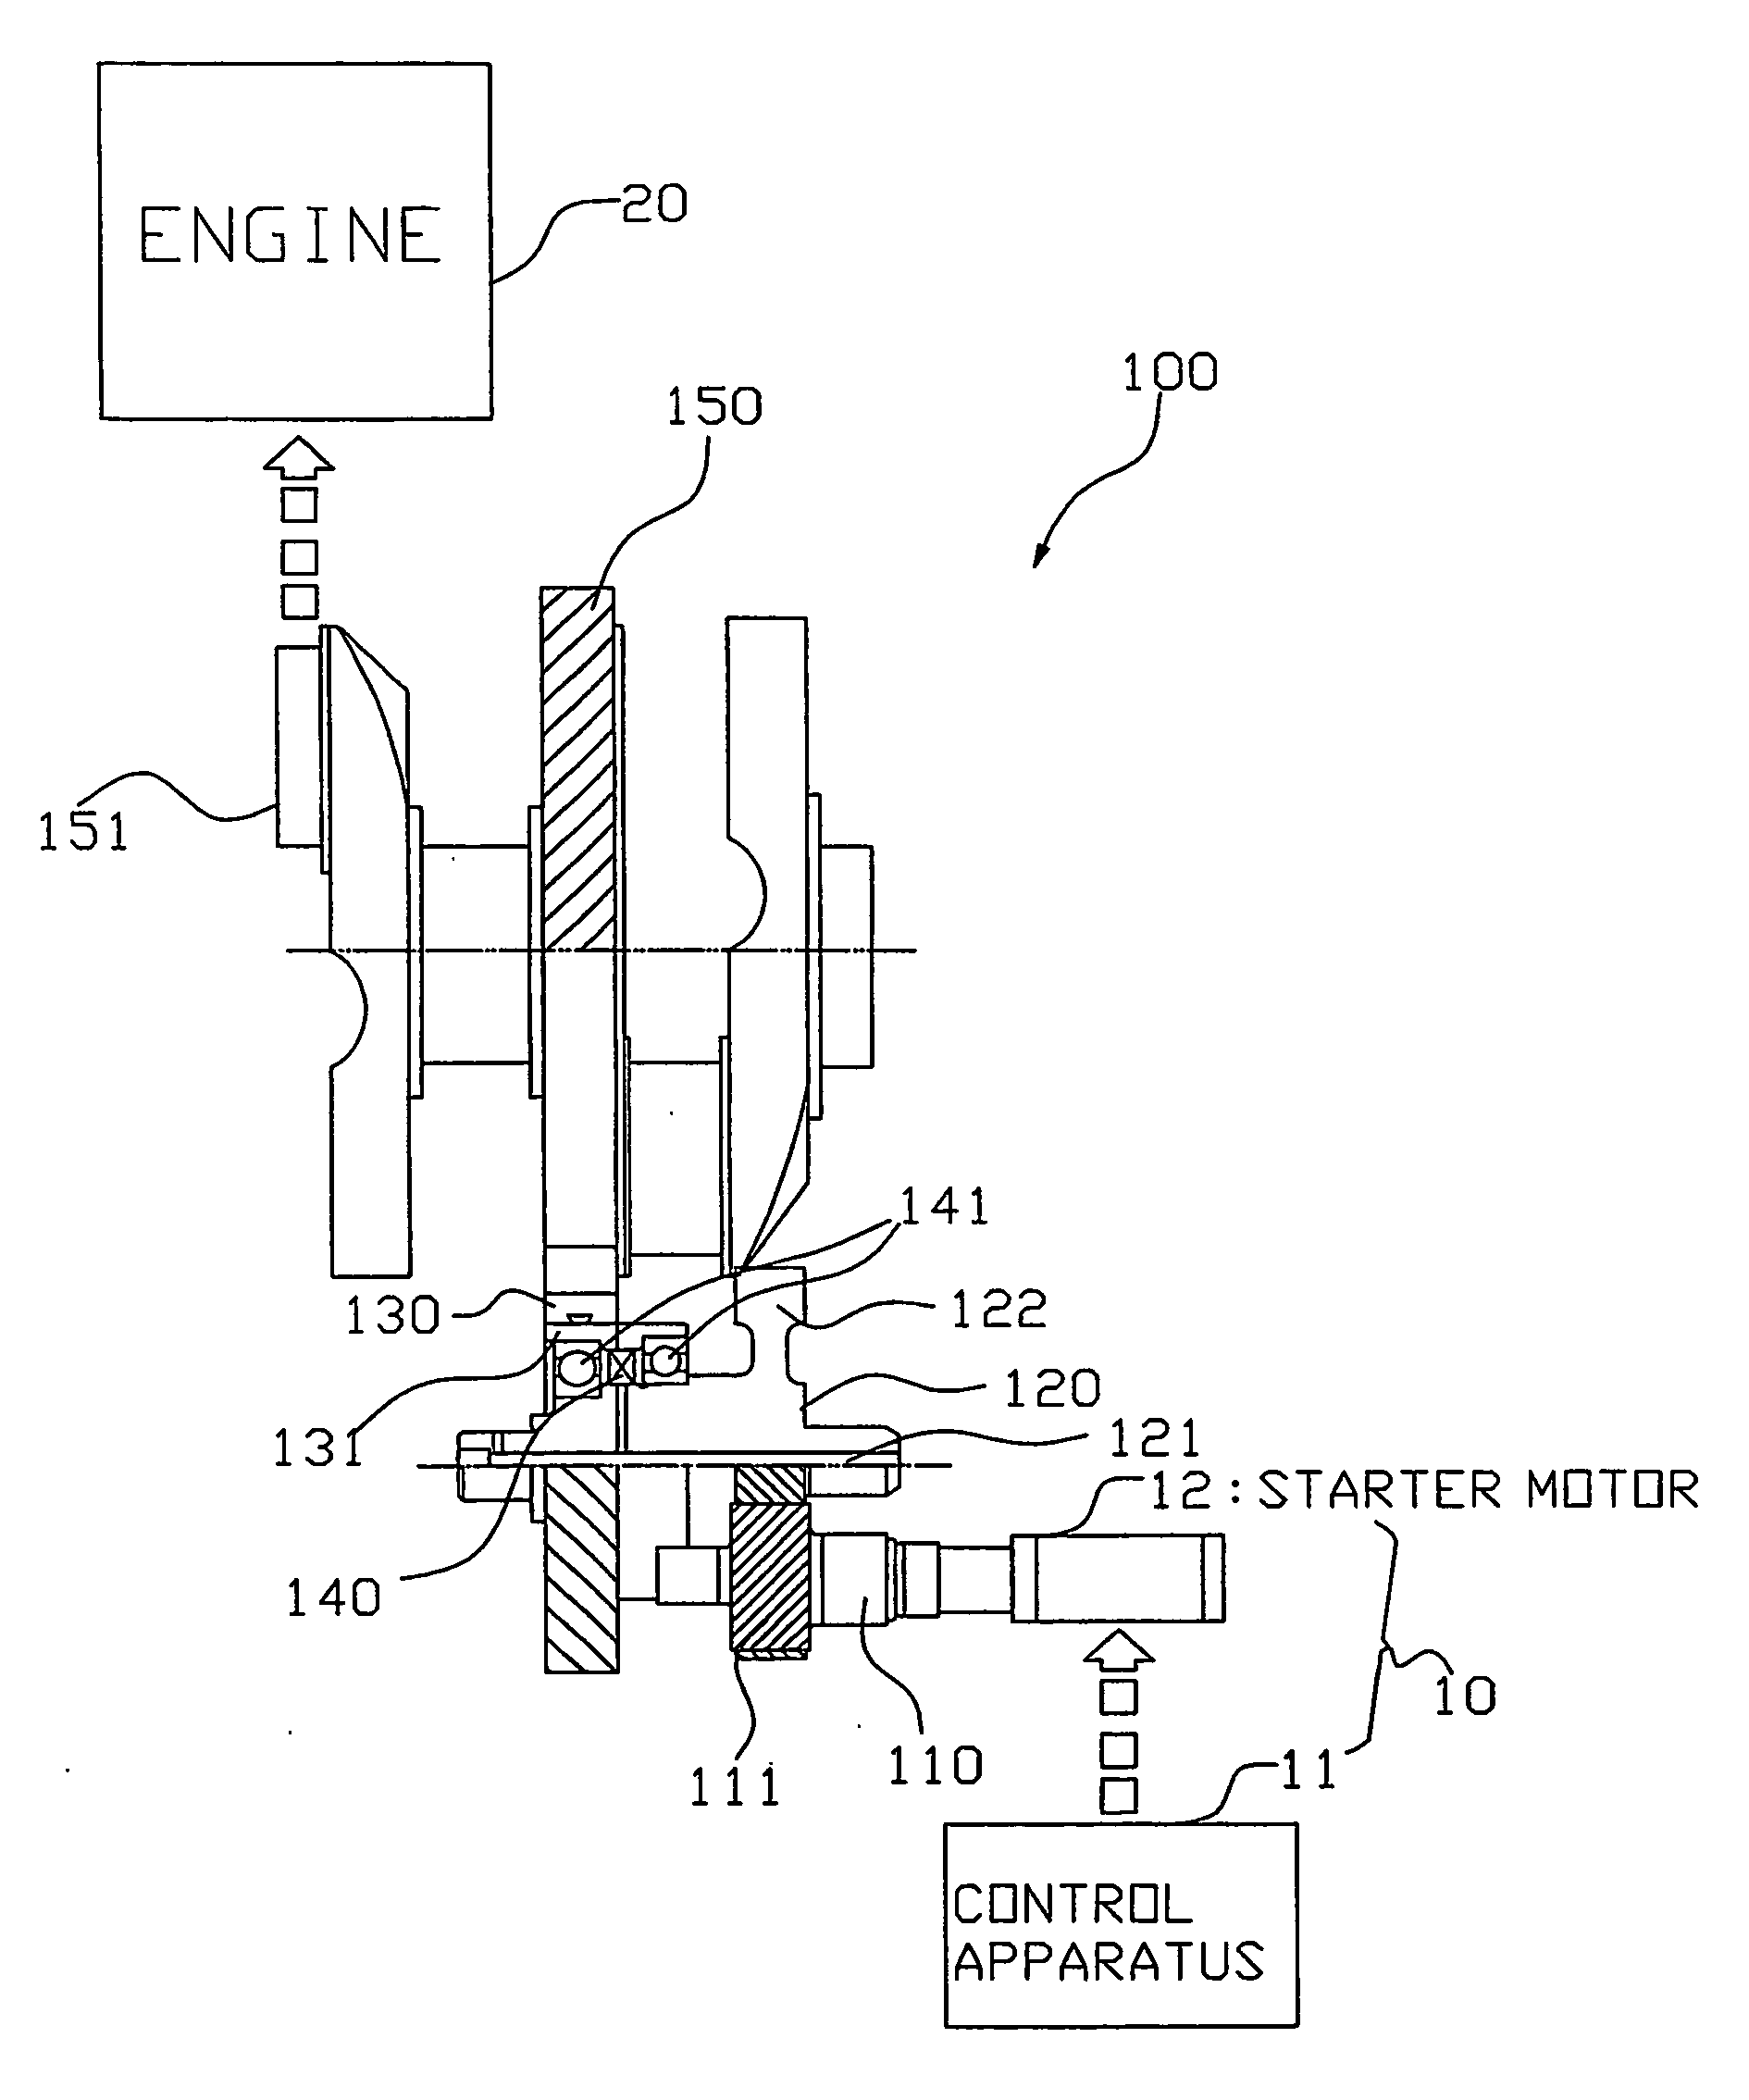 Engine starting apparatus and method